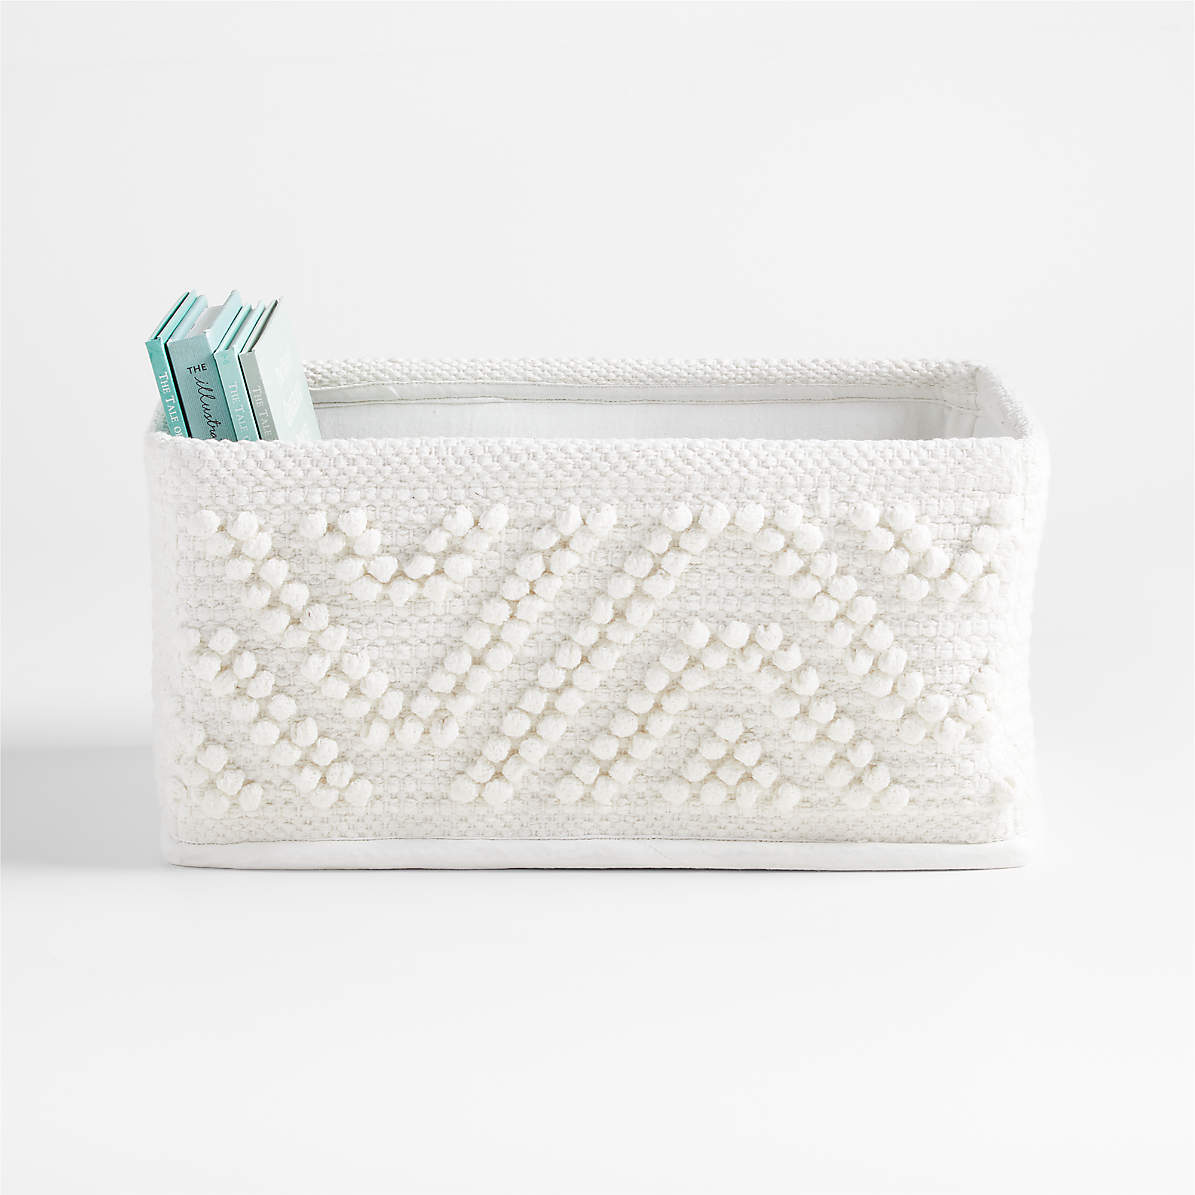 Clear acrylic bins diaper caddy｜TikTok Search